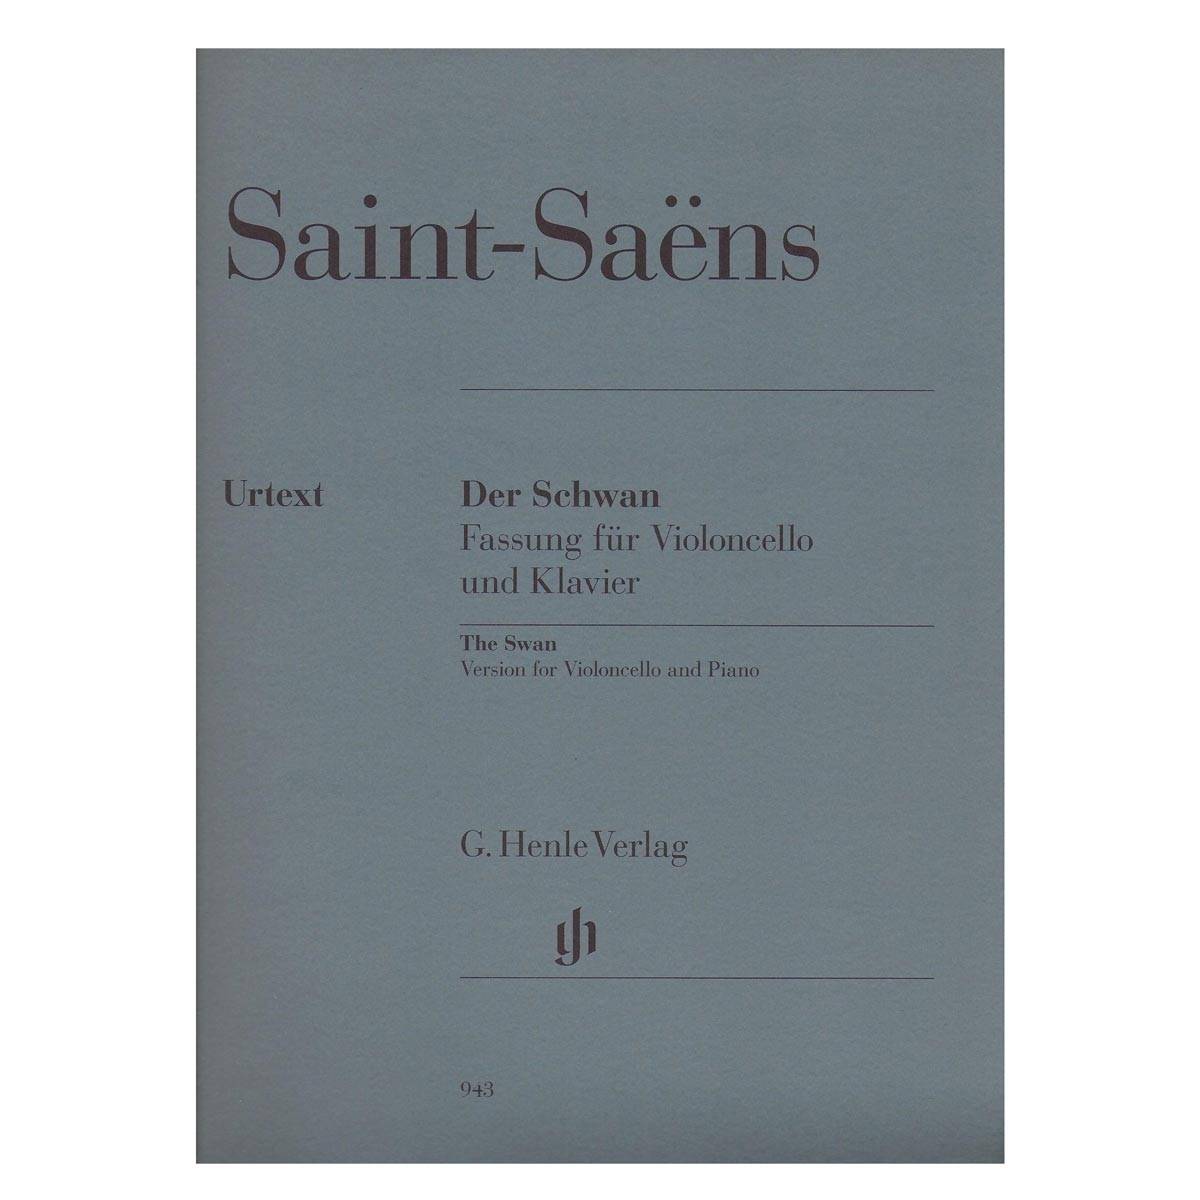 Saint-Saens - The Swan for Cello & Piano